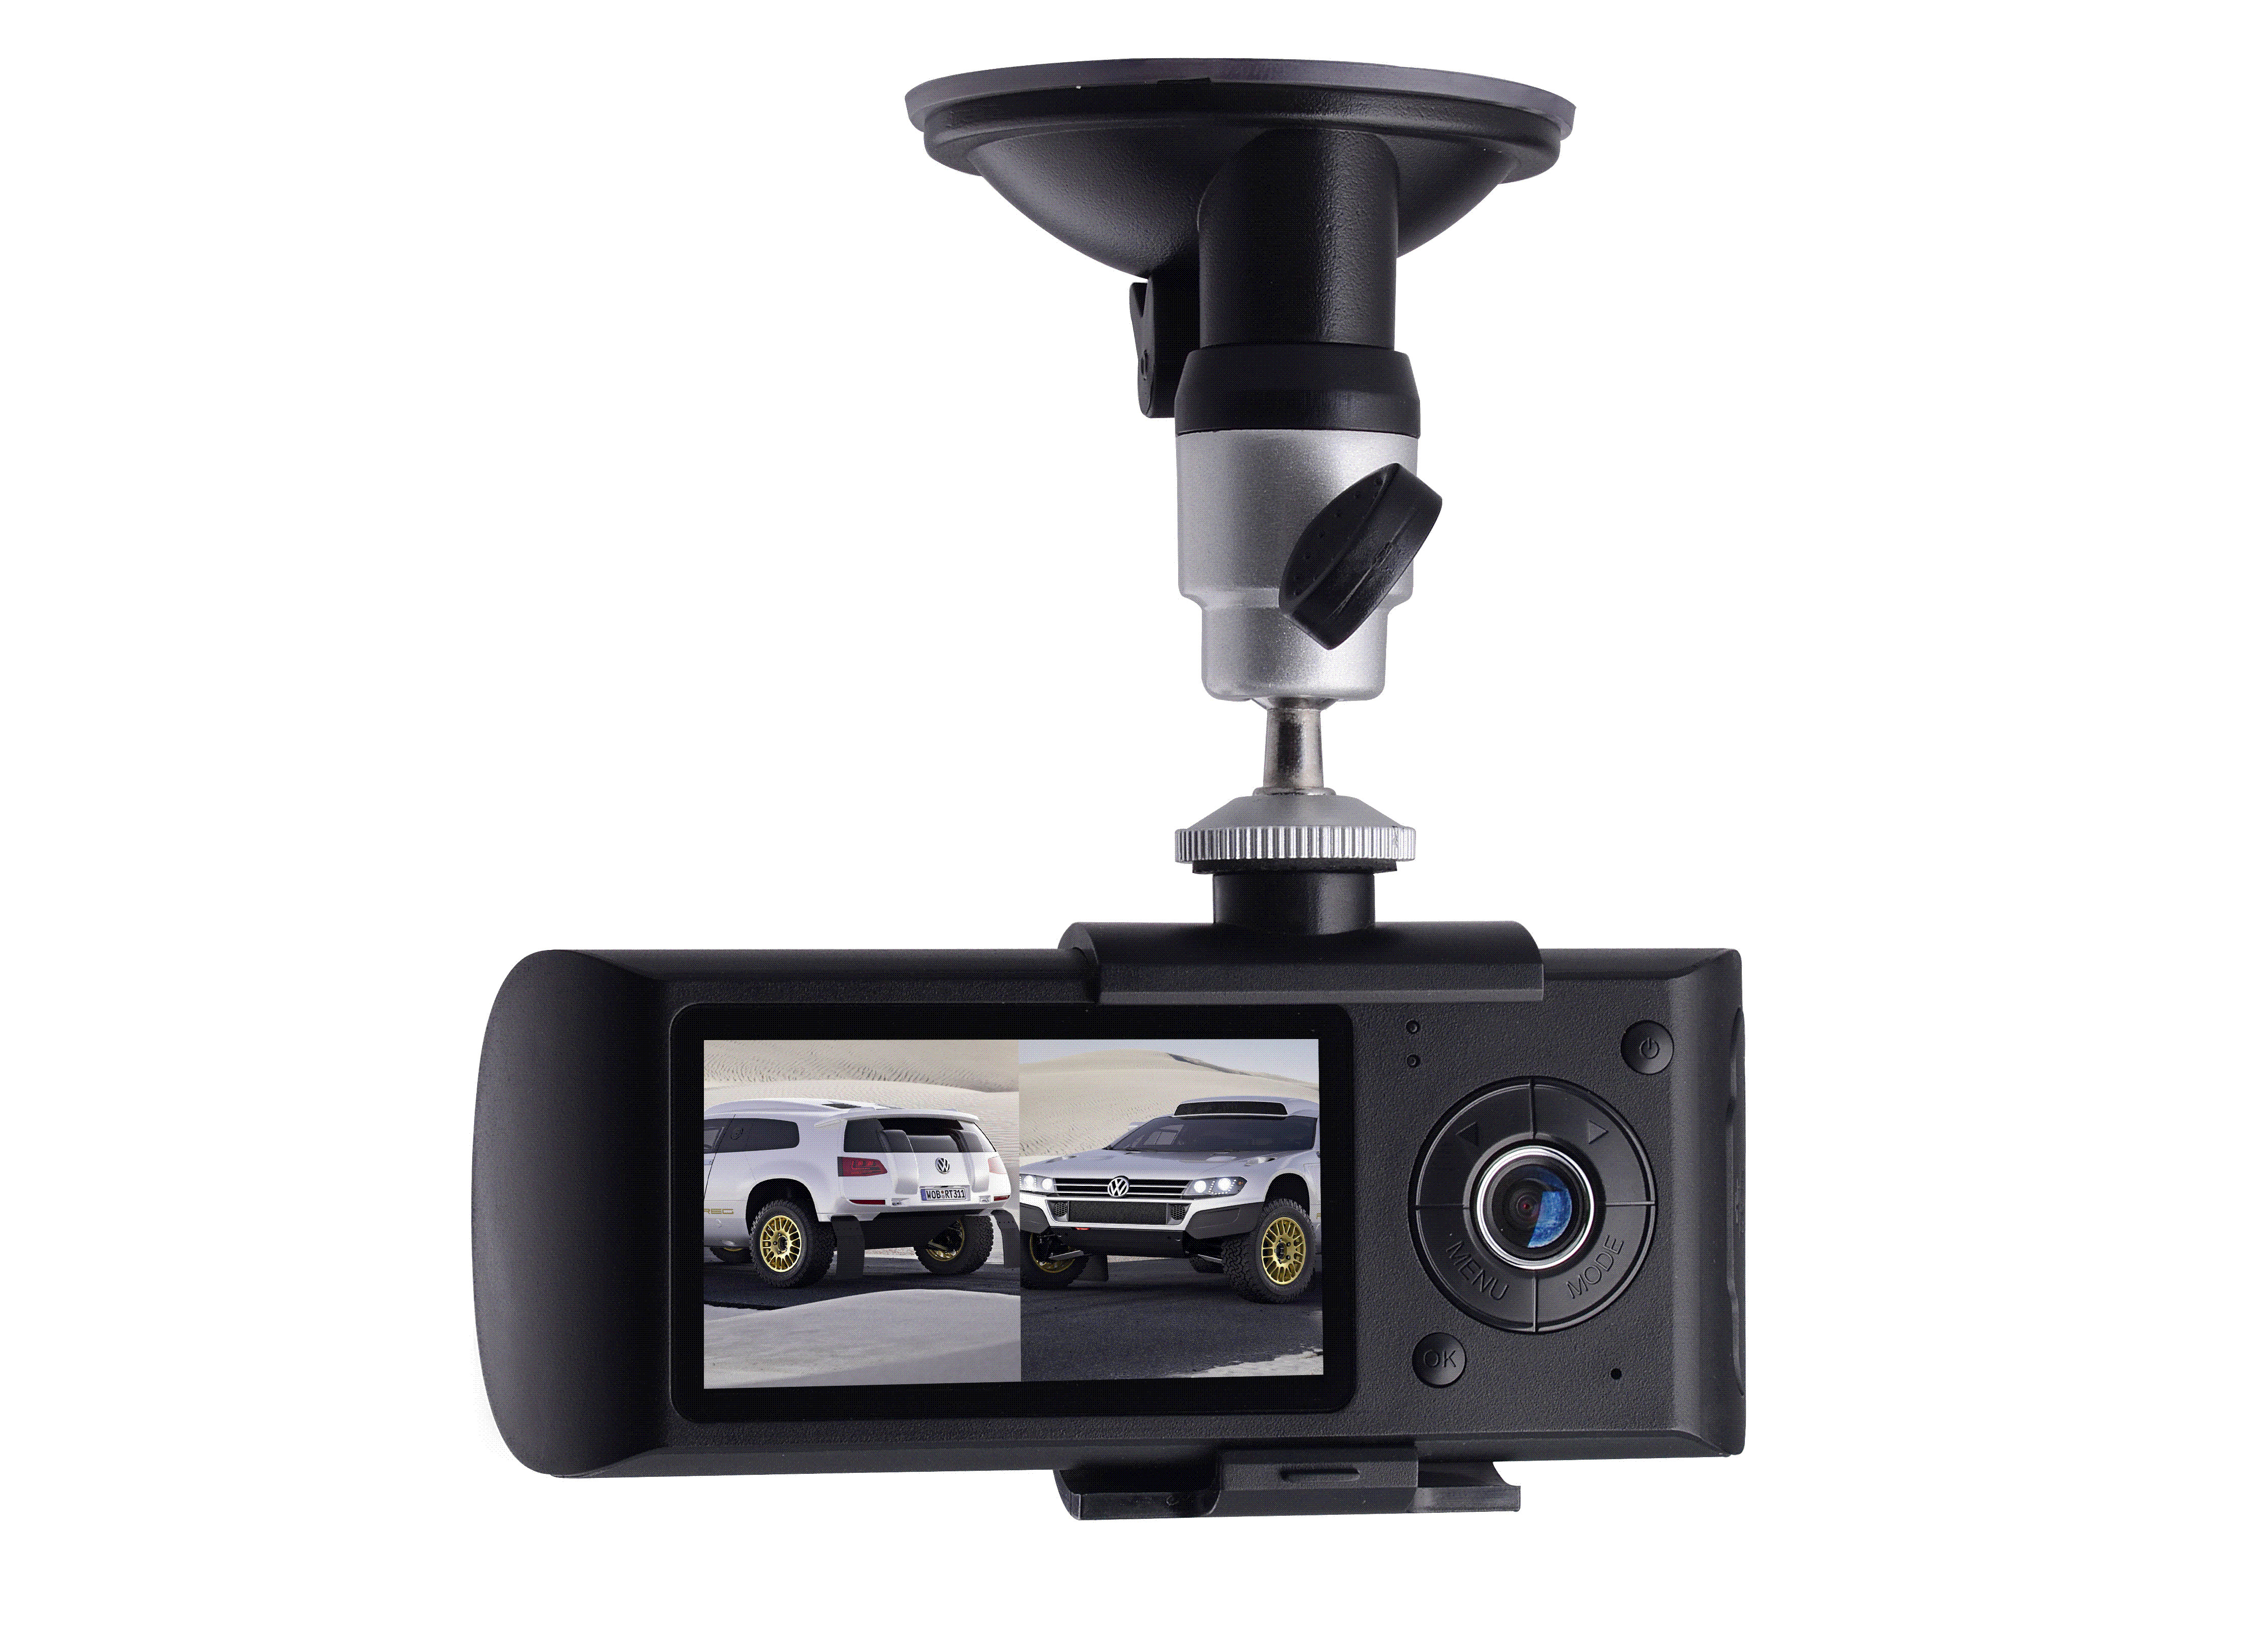 Best USB 2.0 Dual Camera Vehicle Car Video recorder with GPS G-Sensor HD DVR Black Box wholesale